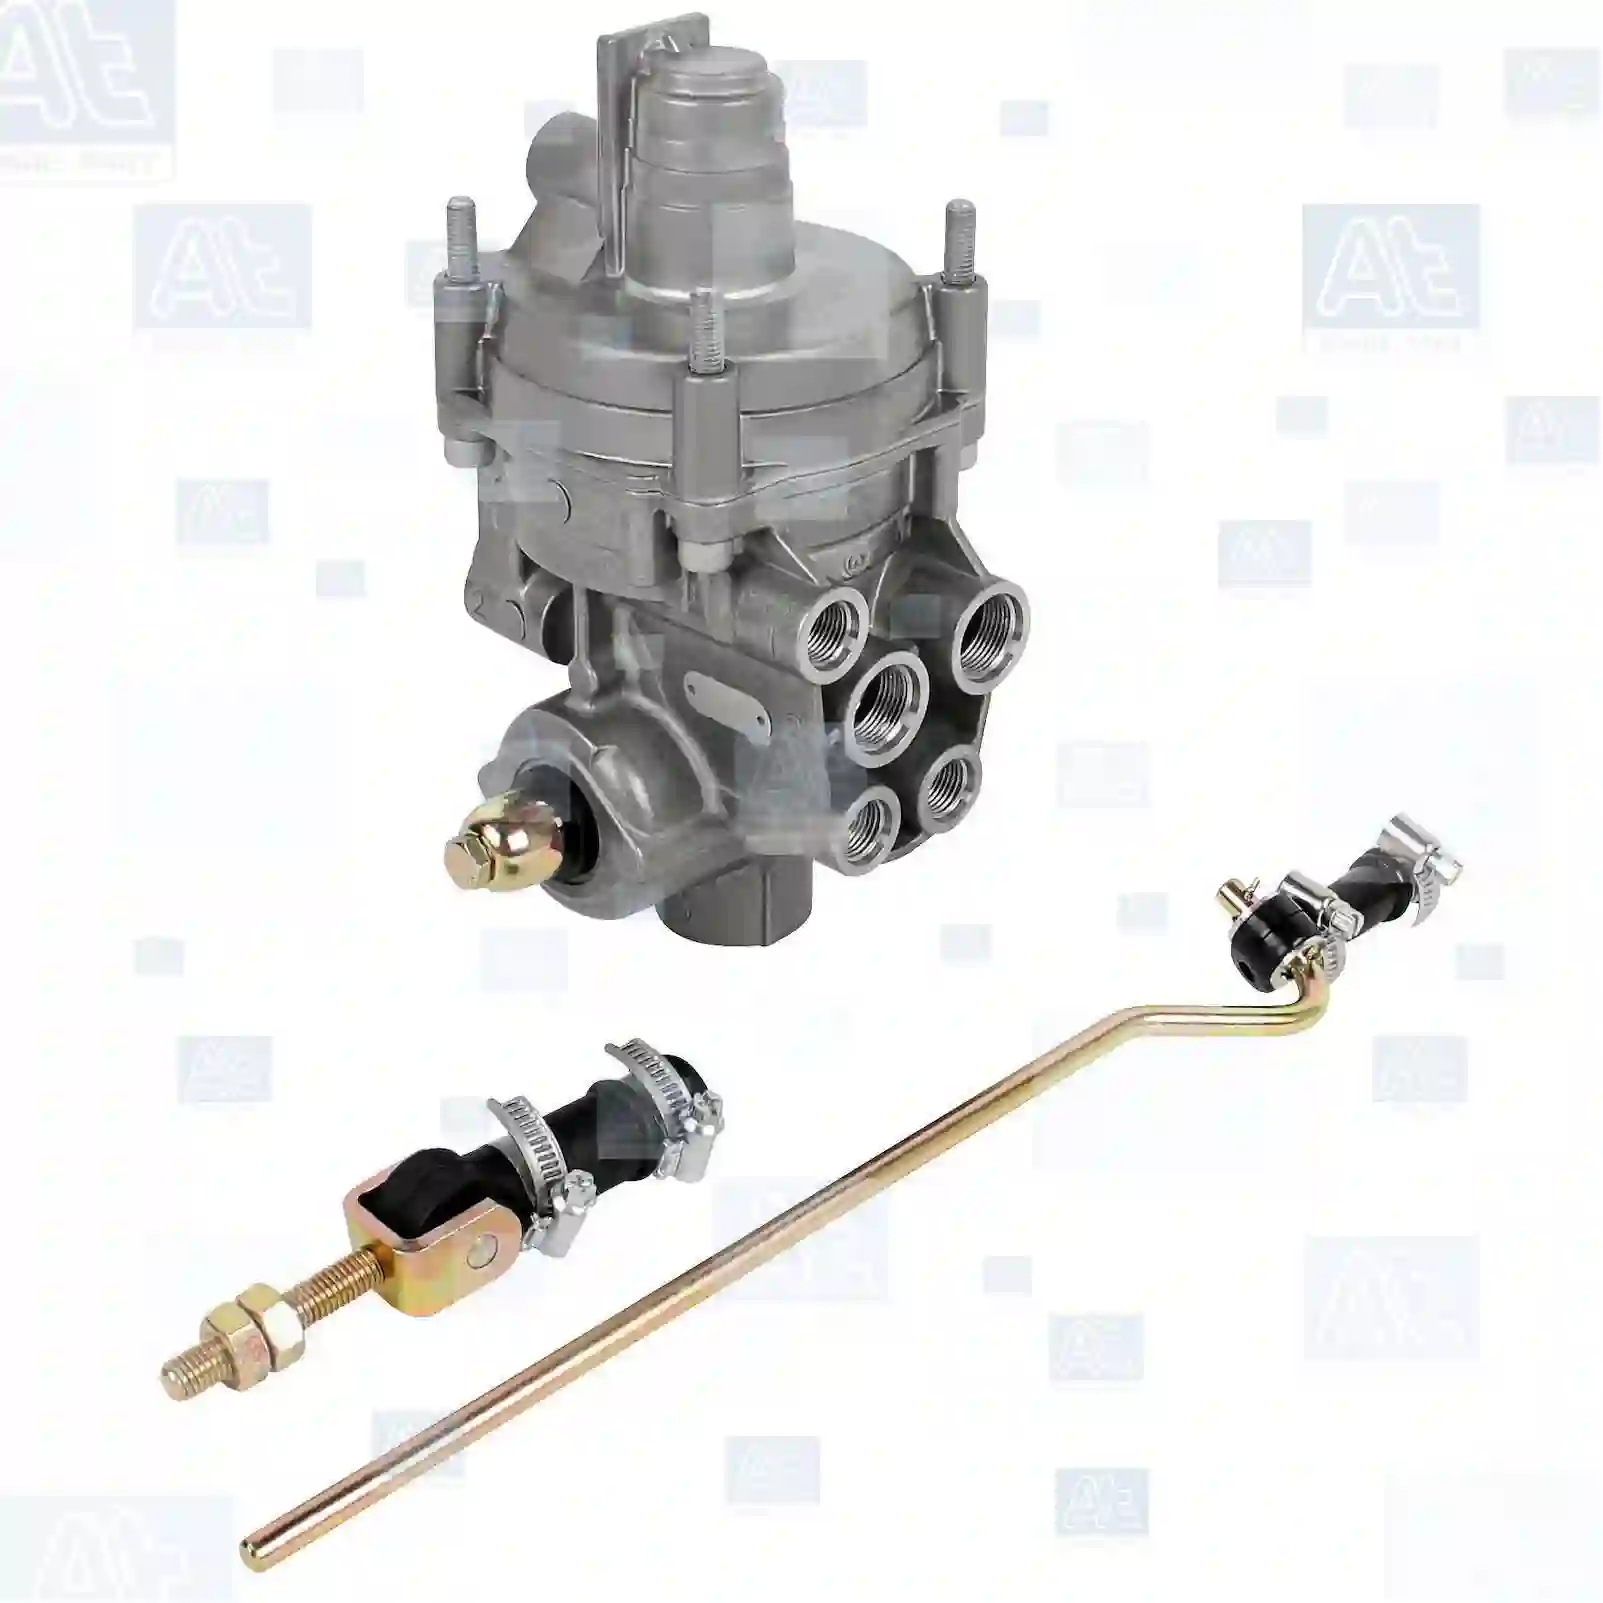 Load sensitive valve, 77714894, 1325324, 1325324R, 1506665, BBU8129, AJA0918001, AJA09181, CF350908AJA09181, 500003984, 2090056, ZG50522-0008 ||  77714894 At Spare Part | Engine, Accelerator Pedal, Camshaft, Connecting Rod, Crankcase, Crankshaft, Cylinder Head, Engine Suspension Mountings, Exhaust Manifold, Exhaust Gas Recirculation, Filter Kits, Flywheel Housing, General Overhaul Kits, Engine, Intake Manifold, Oil Cleaner, Oil Cooler, Oil Filter, Oil Pump, Oil Sump, Piston & Liner, Sensor & Switch, Timing Case, Turbocharger, Cooling System, Belt Tensioner, Coolant Filter, Coolant Pipe, Corrosion Prevention Agent, Drive, Expansion Tank, Fan, Intercooler, Monitors & Gauges, Radiator, Thermostat, V-Belt / Timing belt, Water Pump, Fuel System, Electronical Injector Unit, Feed Pump, Fuel Filter, cpl., Fuel Gauge Sender,  Fuel Line, Fuel Pump, Fuel Tank, Injection Line Kit, Injection Pump, Exhaust System, Clutch & Pedal, Gearbox, Propeller Shaft, Axles, Brake System, Hubs & Wheels, Suspension, Leaf Spring, Universal Parts / Accessories, Steering, Electrical System, Cabin Load sensitive valve, 77714894, 1325324, 1325324R, 1506665, BBU8129, AJA0918001, AJA09181, CF350908AJA09181, 500003984, 2090056, ZG50522-0008 ||  77714894 At Spare Part | Engine, Accelerator Pedal, Camshaft, Connecting Rod, Crankcase, Crankshaft, Cylinder Head, Engine Suspension Mountings, Exhaust Manifold, Exhaust Gas Recirculation, Filter Kits, Flywheel Housing, General Overhaul Kits, Engine, Intake Manifold, Oil Cleaner, Oil Cooler, Oil Filter, Oil Pump, Oil Sump, Piston & Liner, Sensor & Switch, Timing Case, Turbocharger, Cooling System, Belt Tensioner, Coolant Filter, Coolant Pipe, Corrosion Prevention Agent, Drive, Expansion Tank, Fan, Intercooler, Monitors & Gauges, Radiator, Thermostat, V-Belt / Timing belt, Water Pump, Fuel System, Electronical Injector Unit, Feed Pump, Fuel Filter, cpl., Fuel Gauge Sender,  Fuel Line, Fuel Pump, Fuel Tank, Injection Line Kit, Injection Pump, Exhaust System, Clutch & Pedal, Gearbox, Propeller Shaft, Axles, Brake System, Hubs & Wheels, Suspension, Leaf Spring, Universal Parts / Accessories, Steering, Electrical System, Cabin